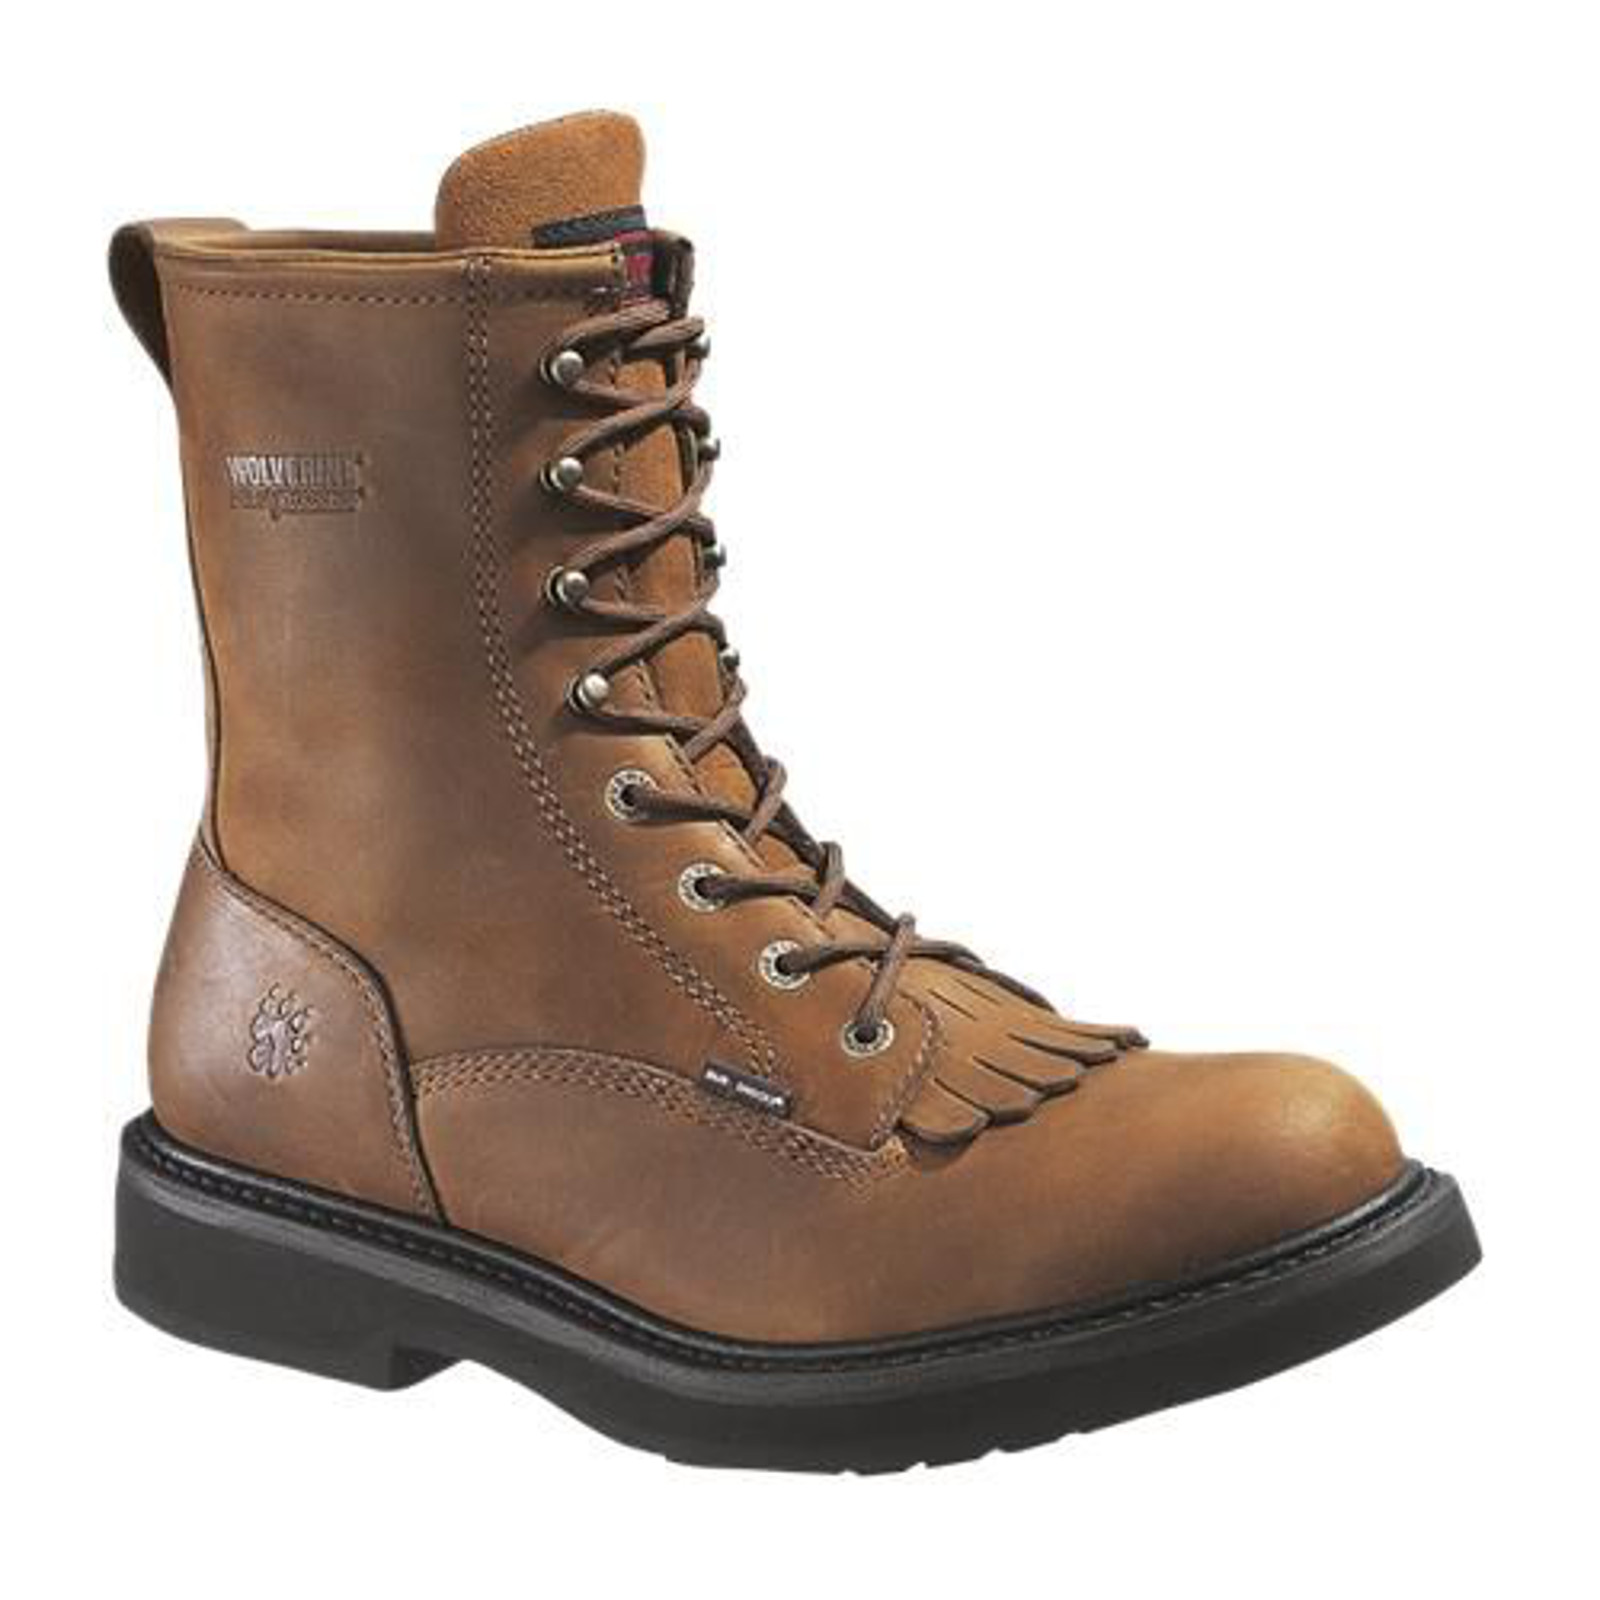 UPC 098776023392 product image for Men's Ingham Kiltie DuraShocks Brown Leather Steel-Toe Work Boots | upcitemdb.com